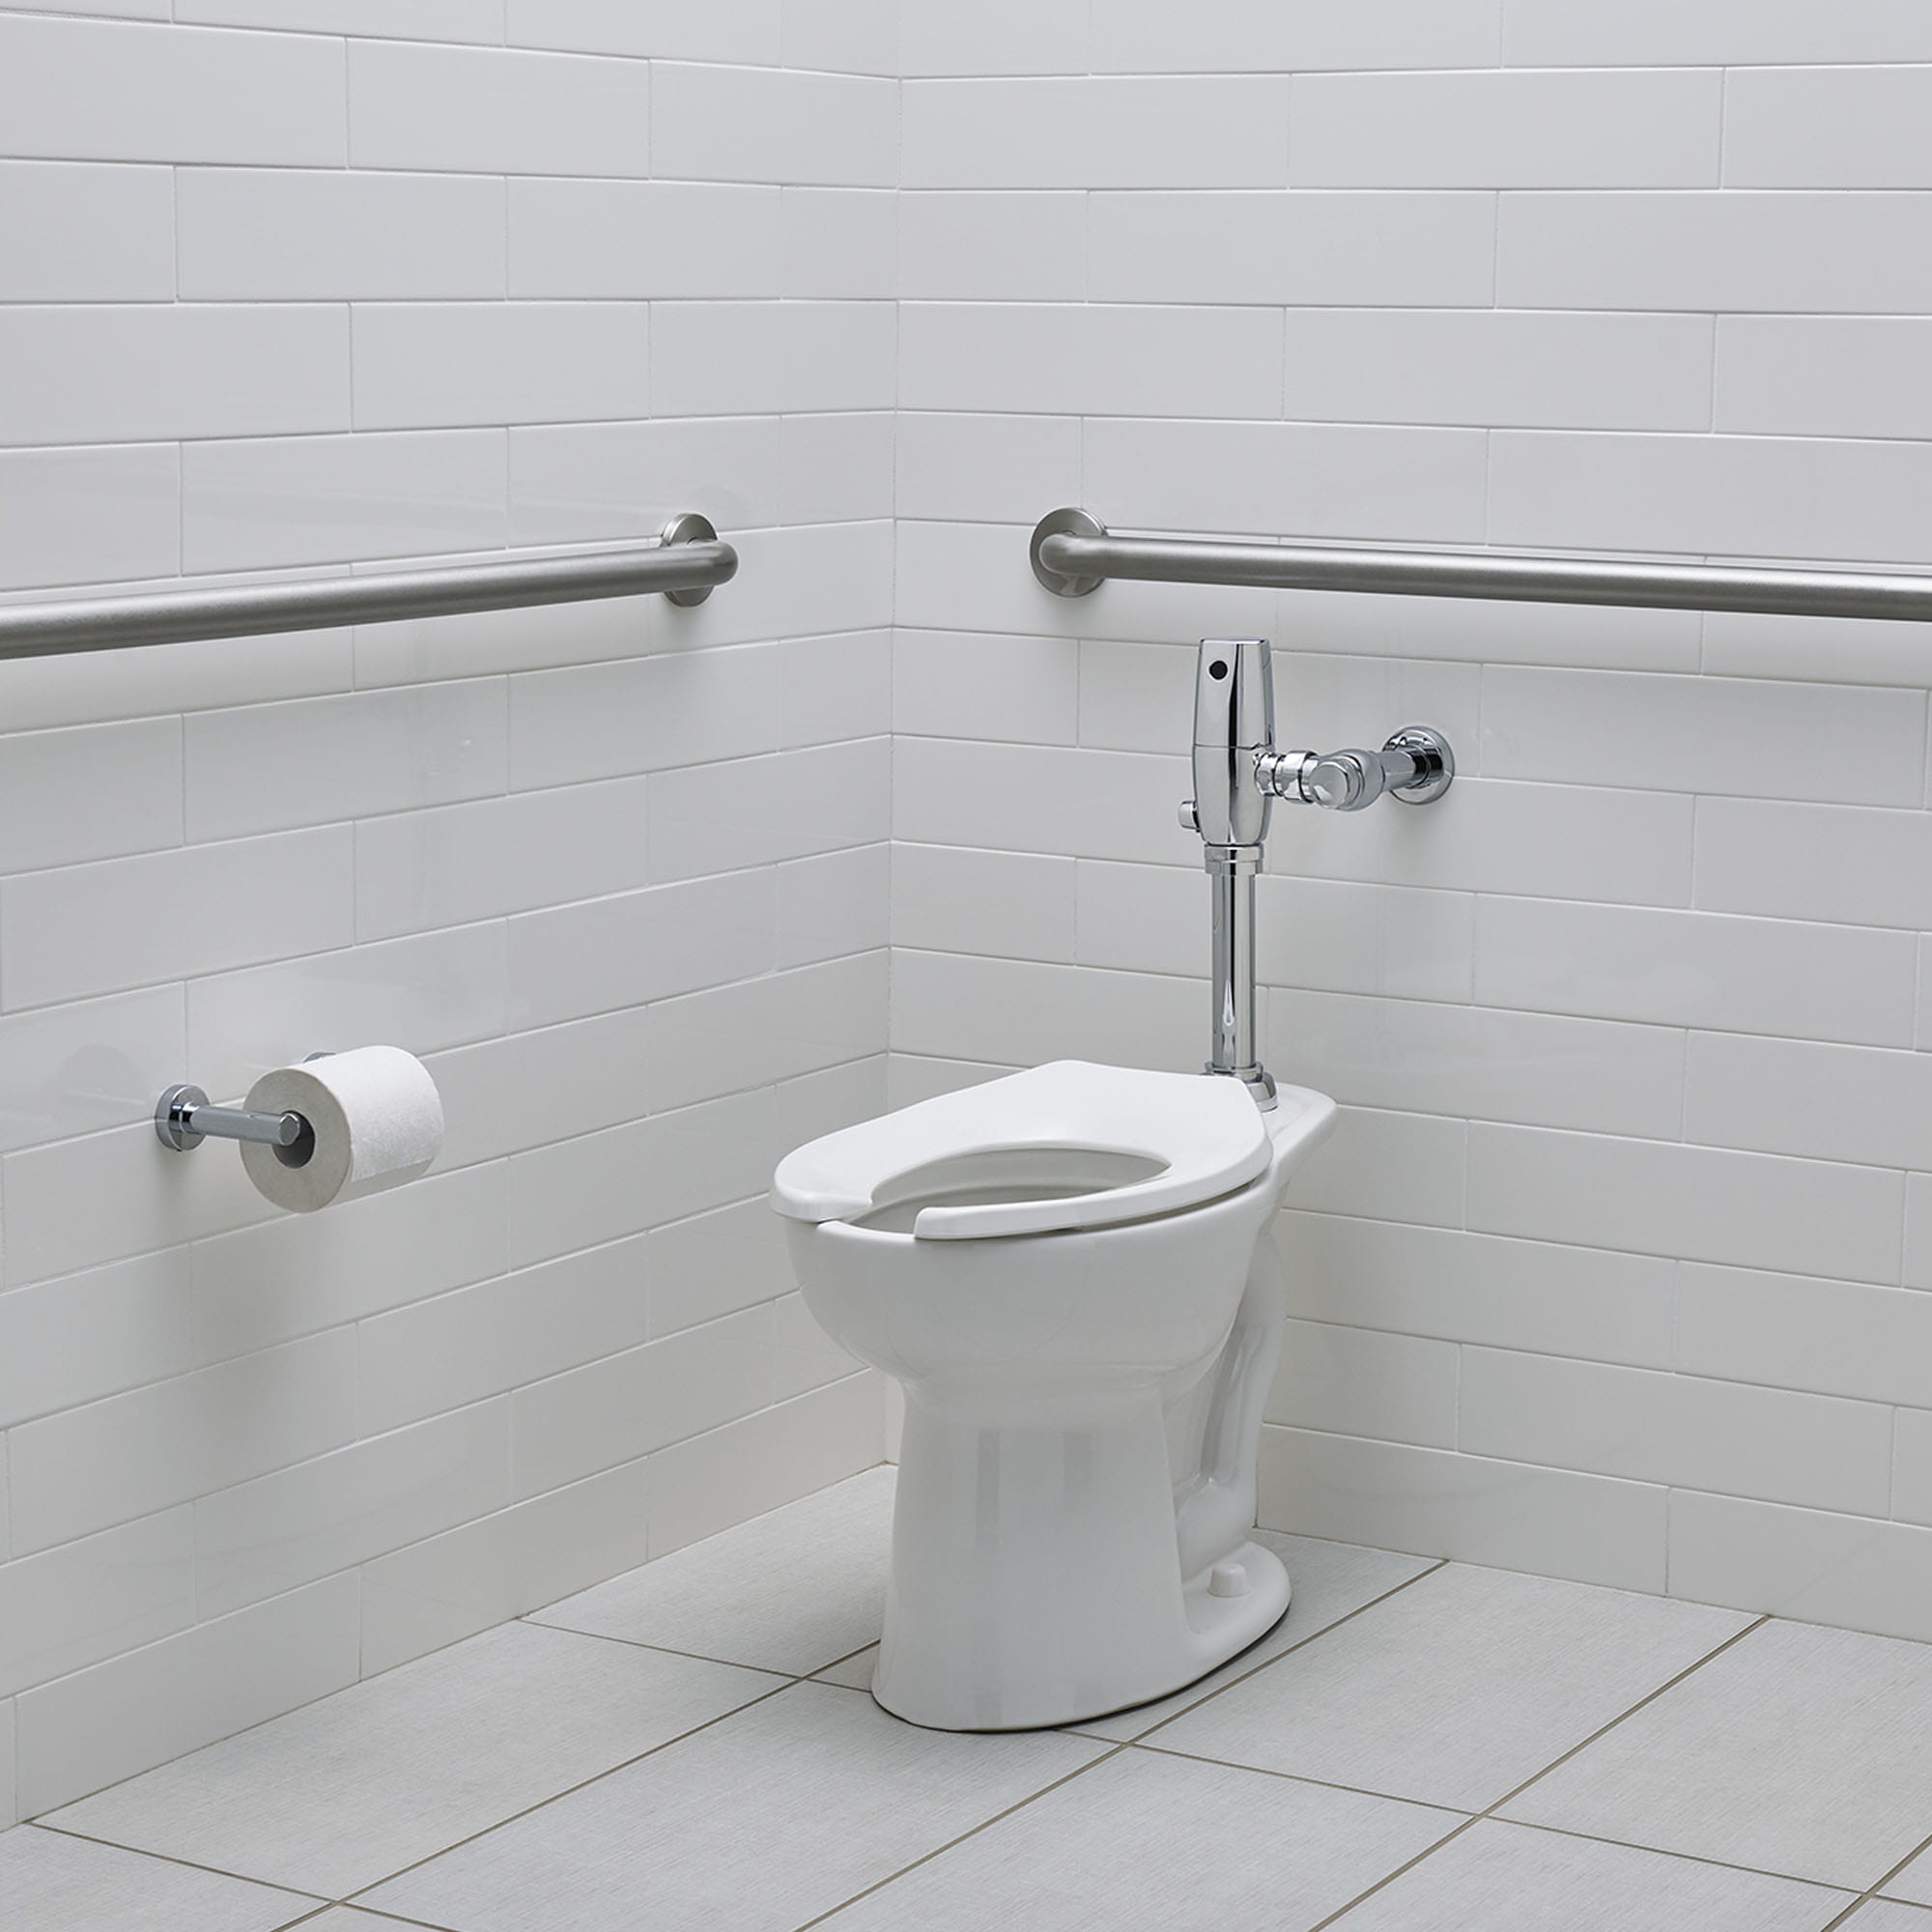 NEW American Standard Elongated Heavy Duty Toilet Seat 5901110T.020 Commercial 